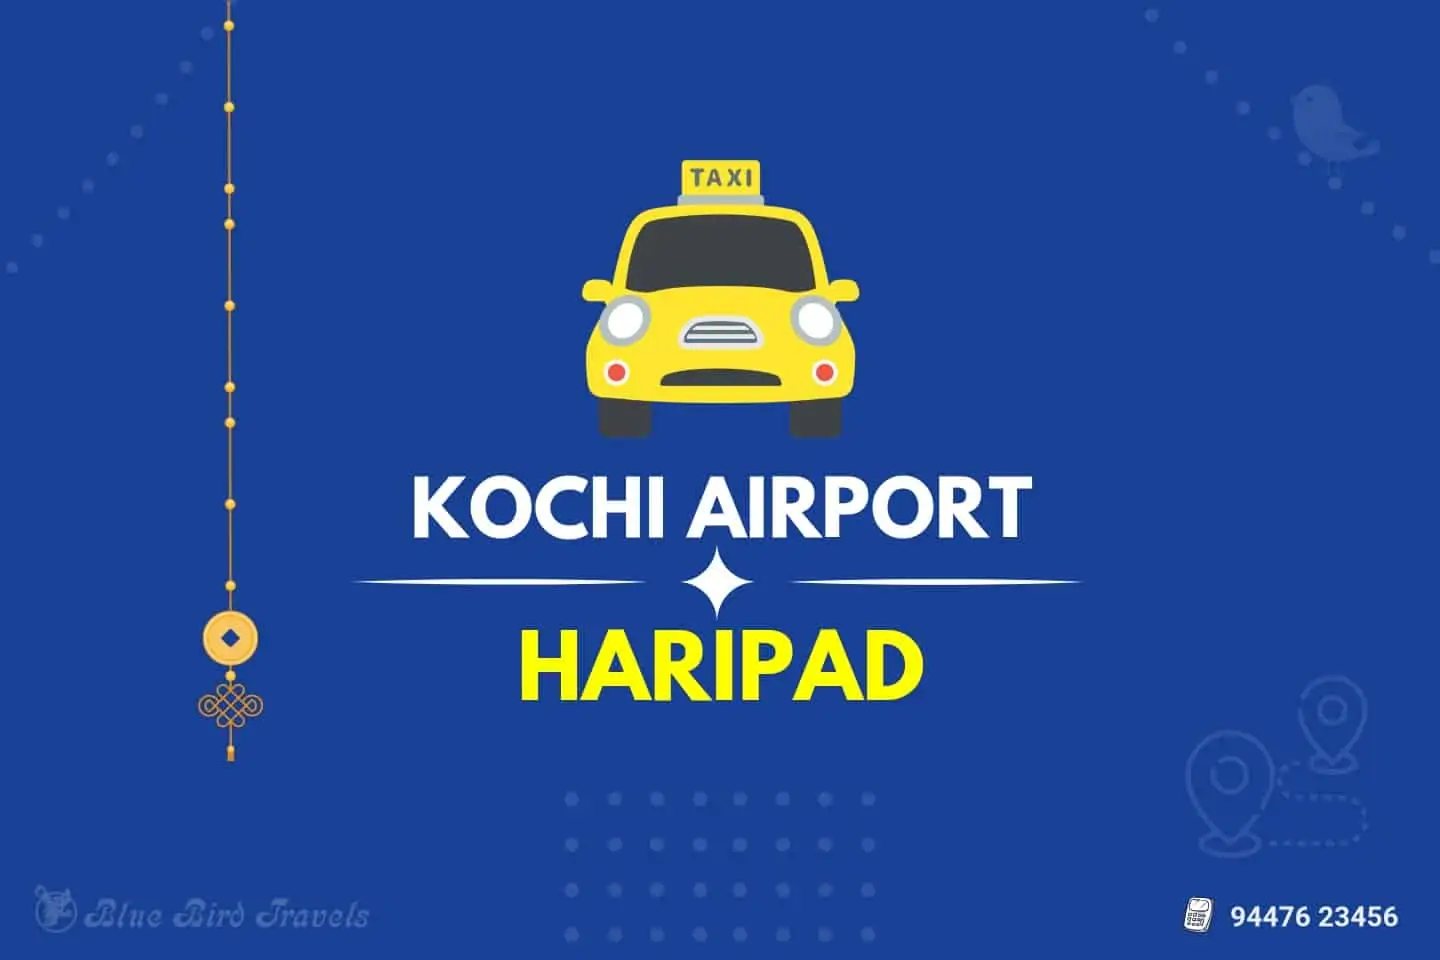 Kochi Airport to Haripad Taxi (Featured Image)